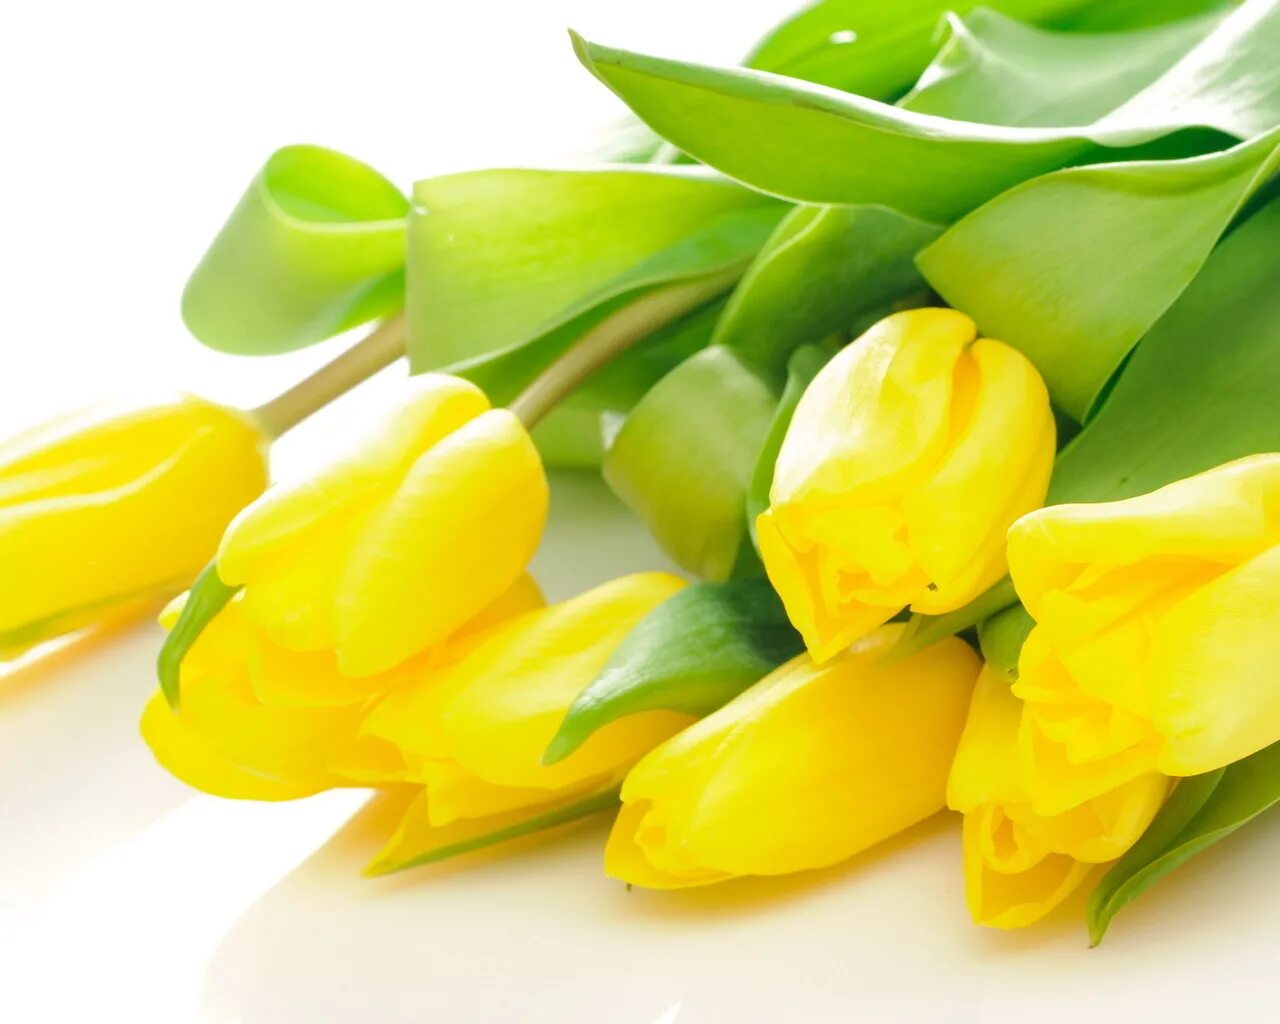 Цветы тюльпаны. Желтые тюльпаны. Желтые тюльпаны цветы. Тюльпаны фон. Ебанько желтые тюльпаны текст